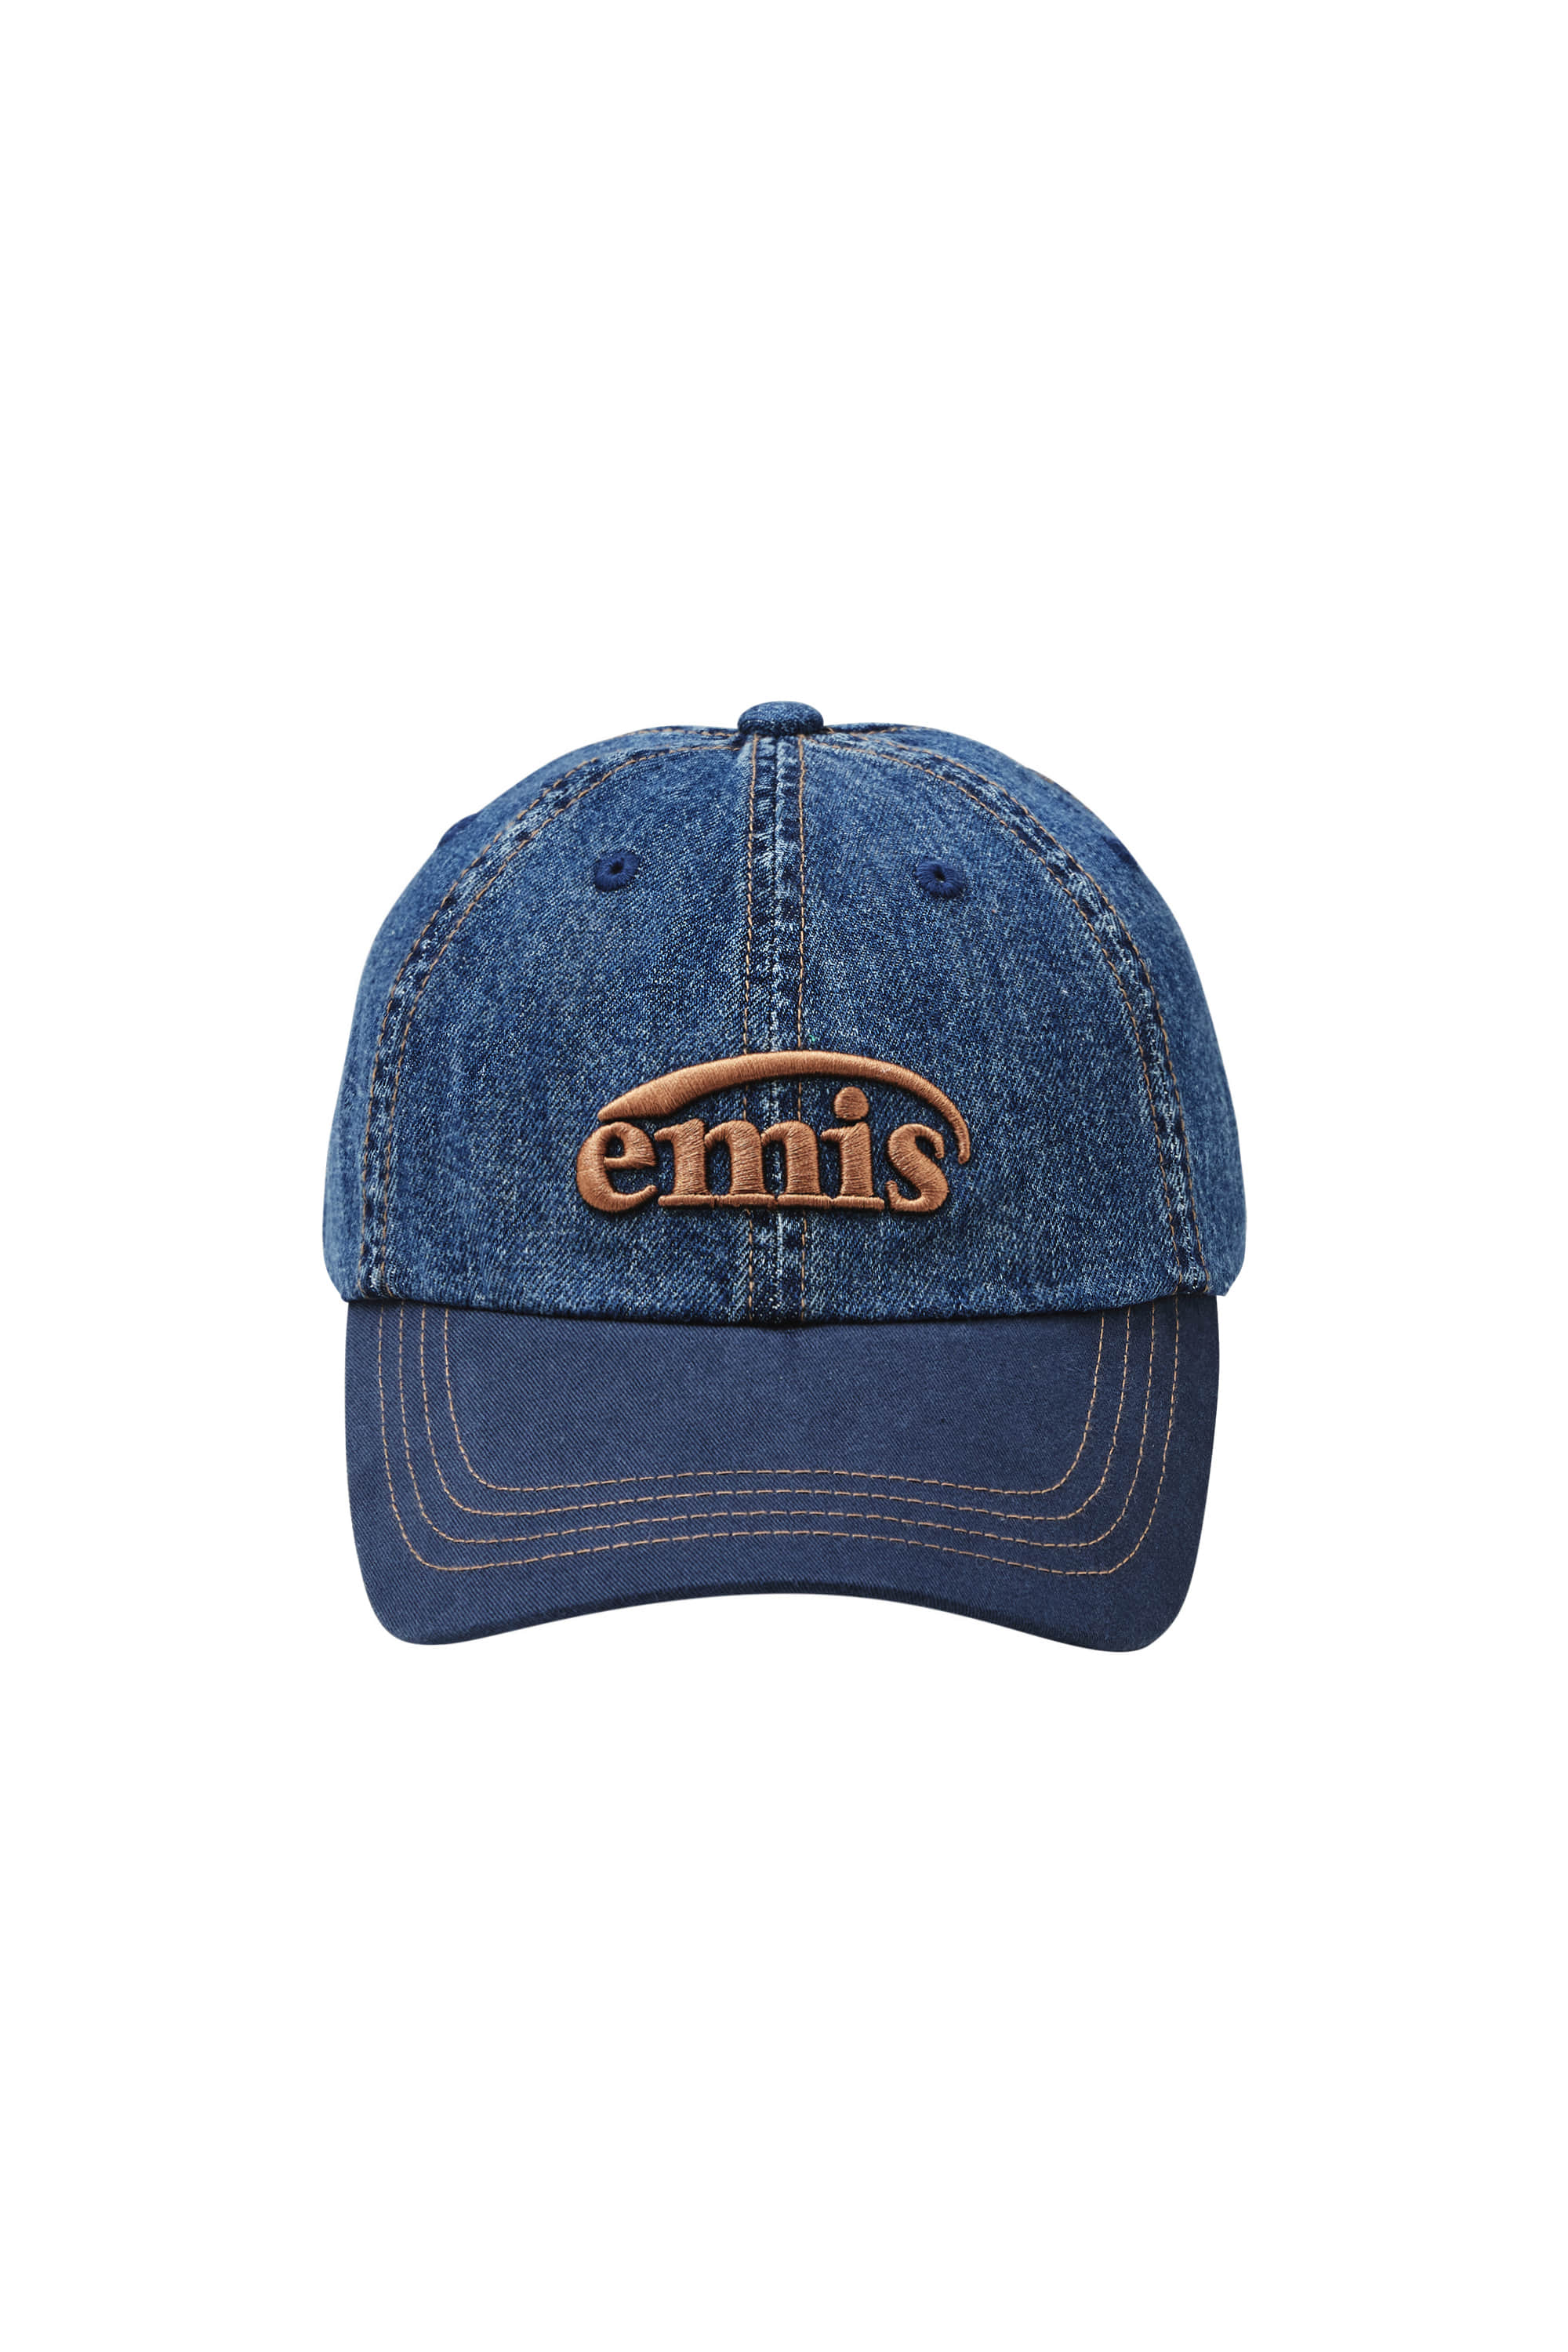 韓國EMIS - WASHED DENIM BALL CAP-BLUE/NAVY 水洗牛仔球帽-藍色/海軍藍